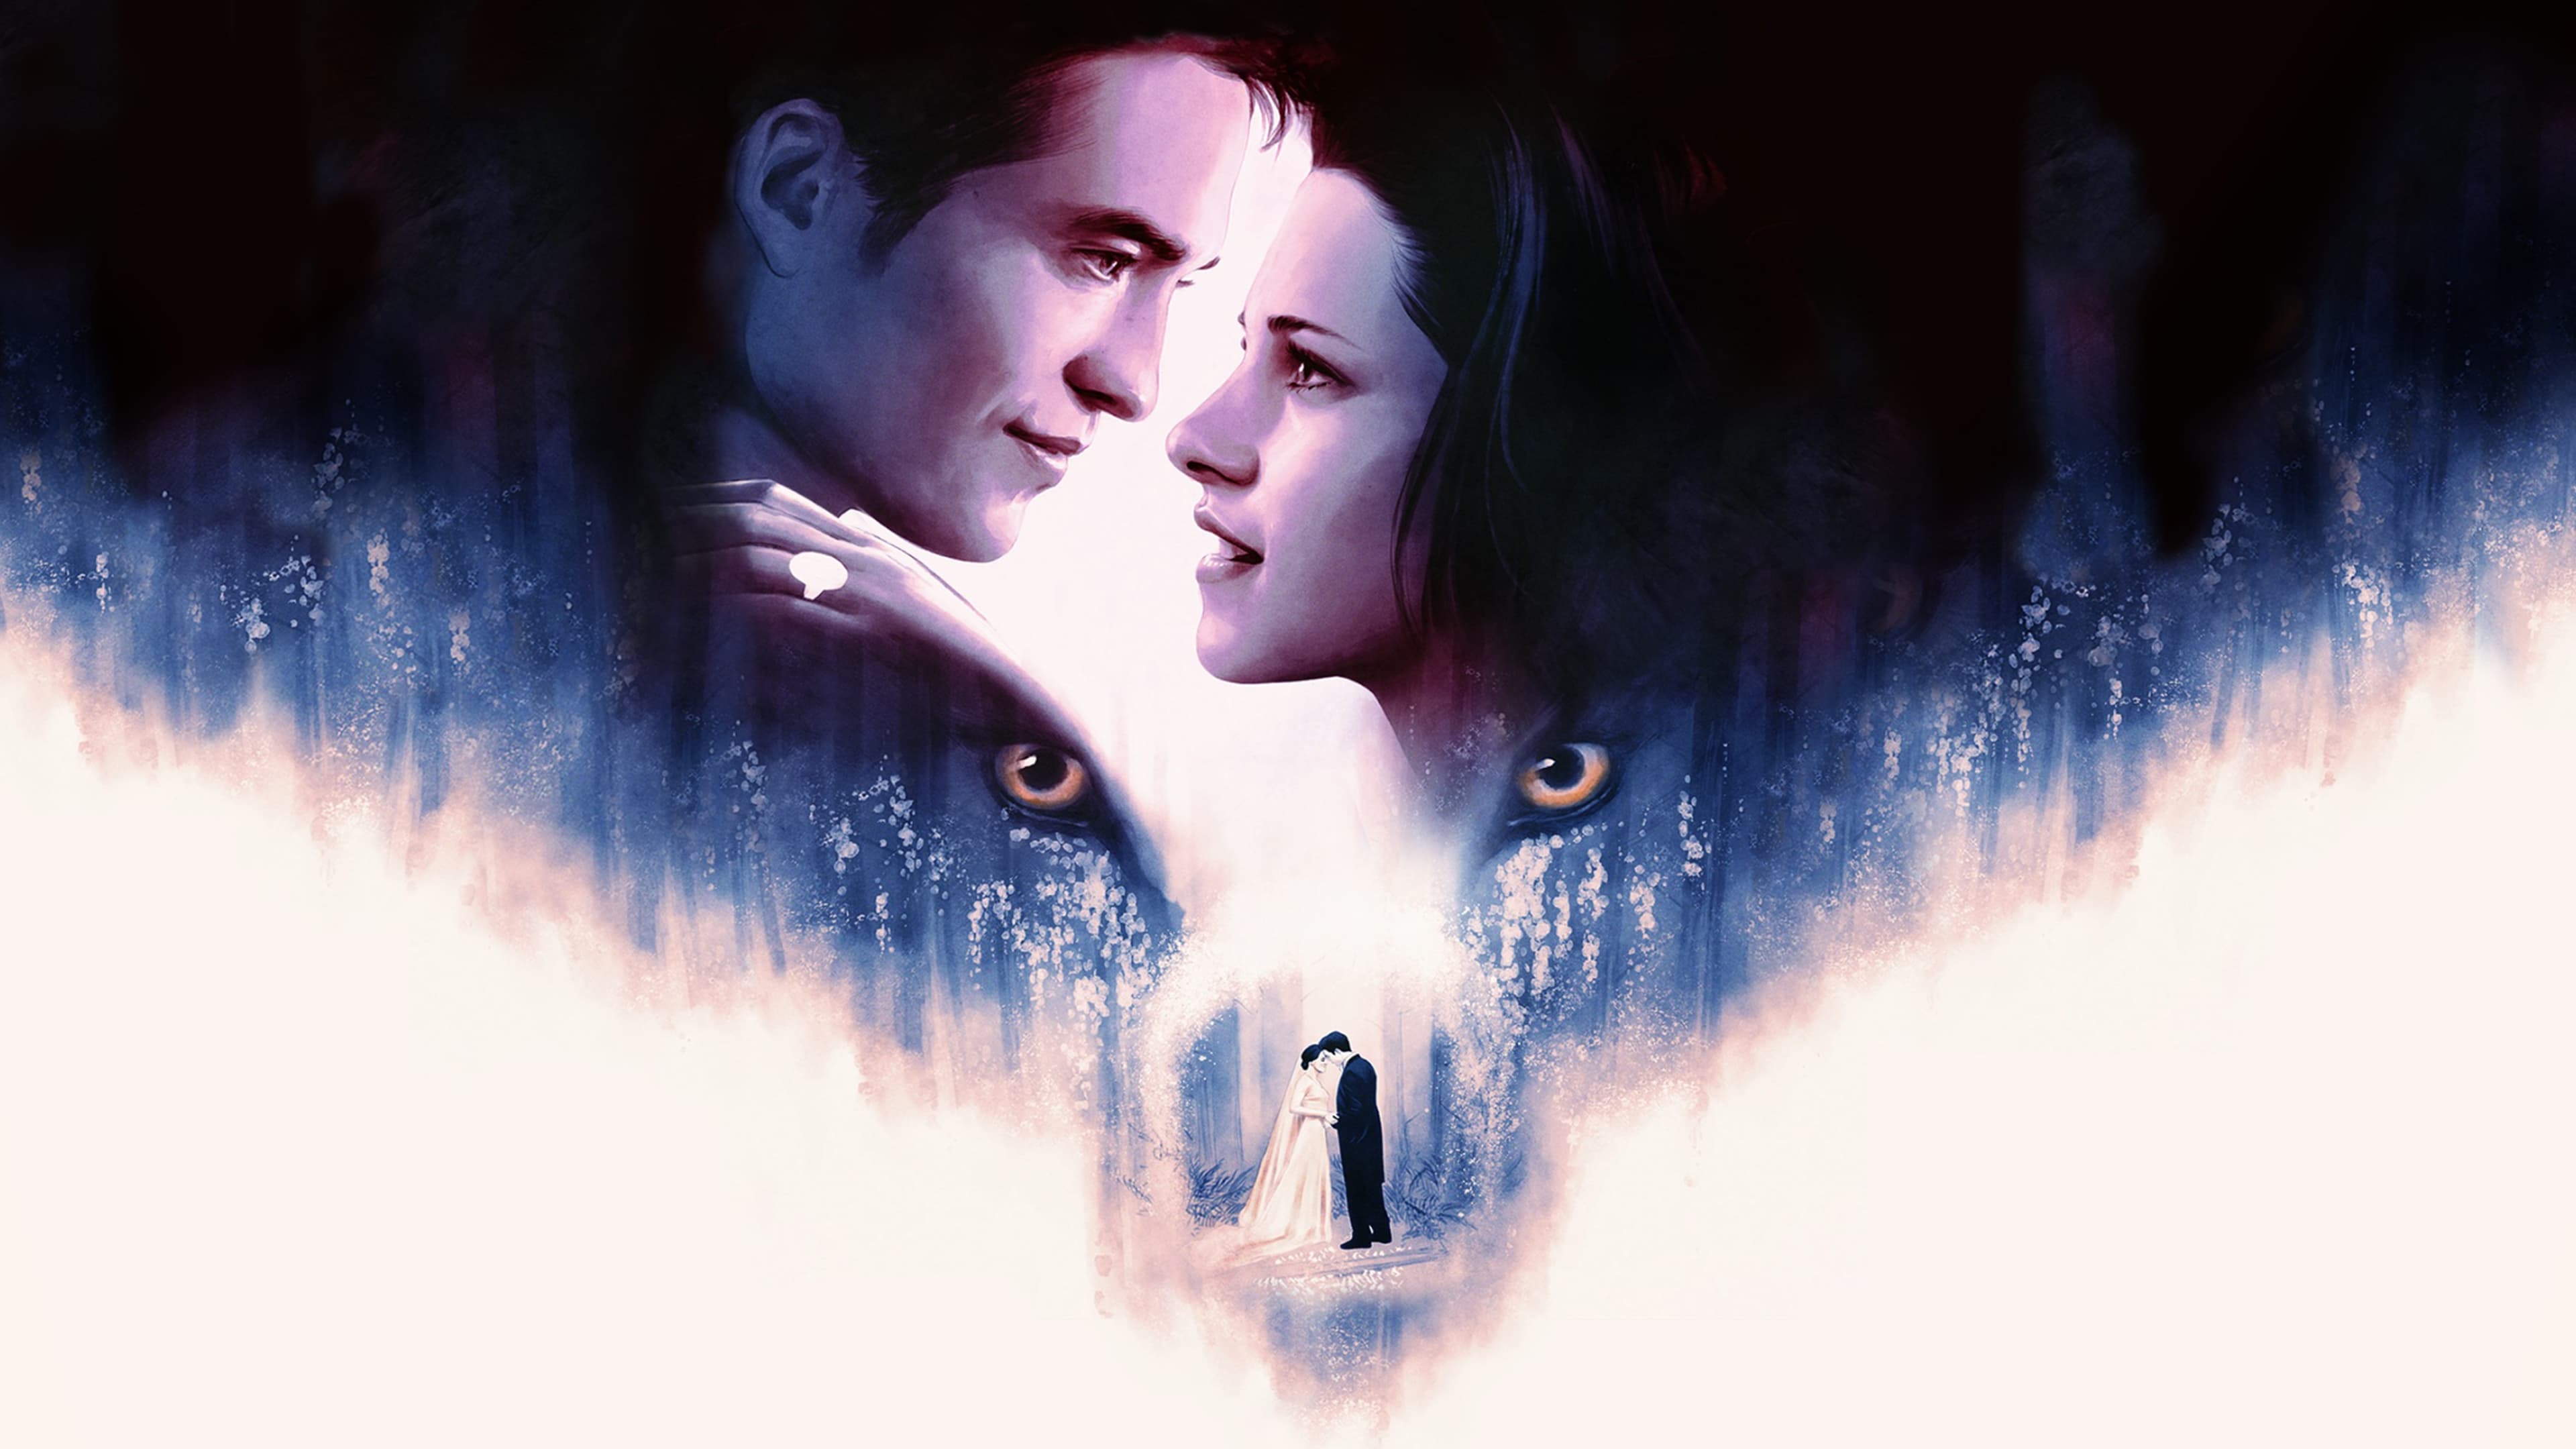 Image du film Twilight, chapitre 4 : révélation, 1re partie nz5mgaqw4ffrm8twuubaepwgb3ijpg